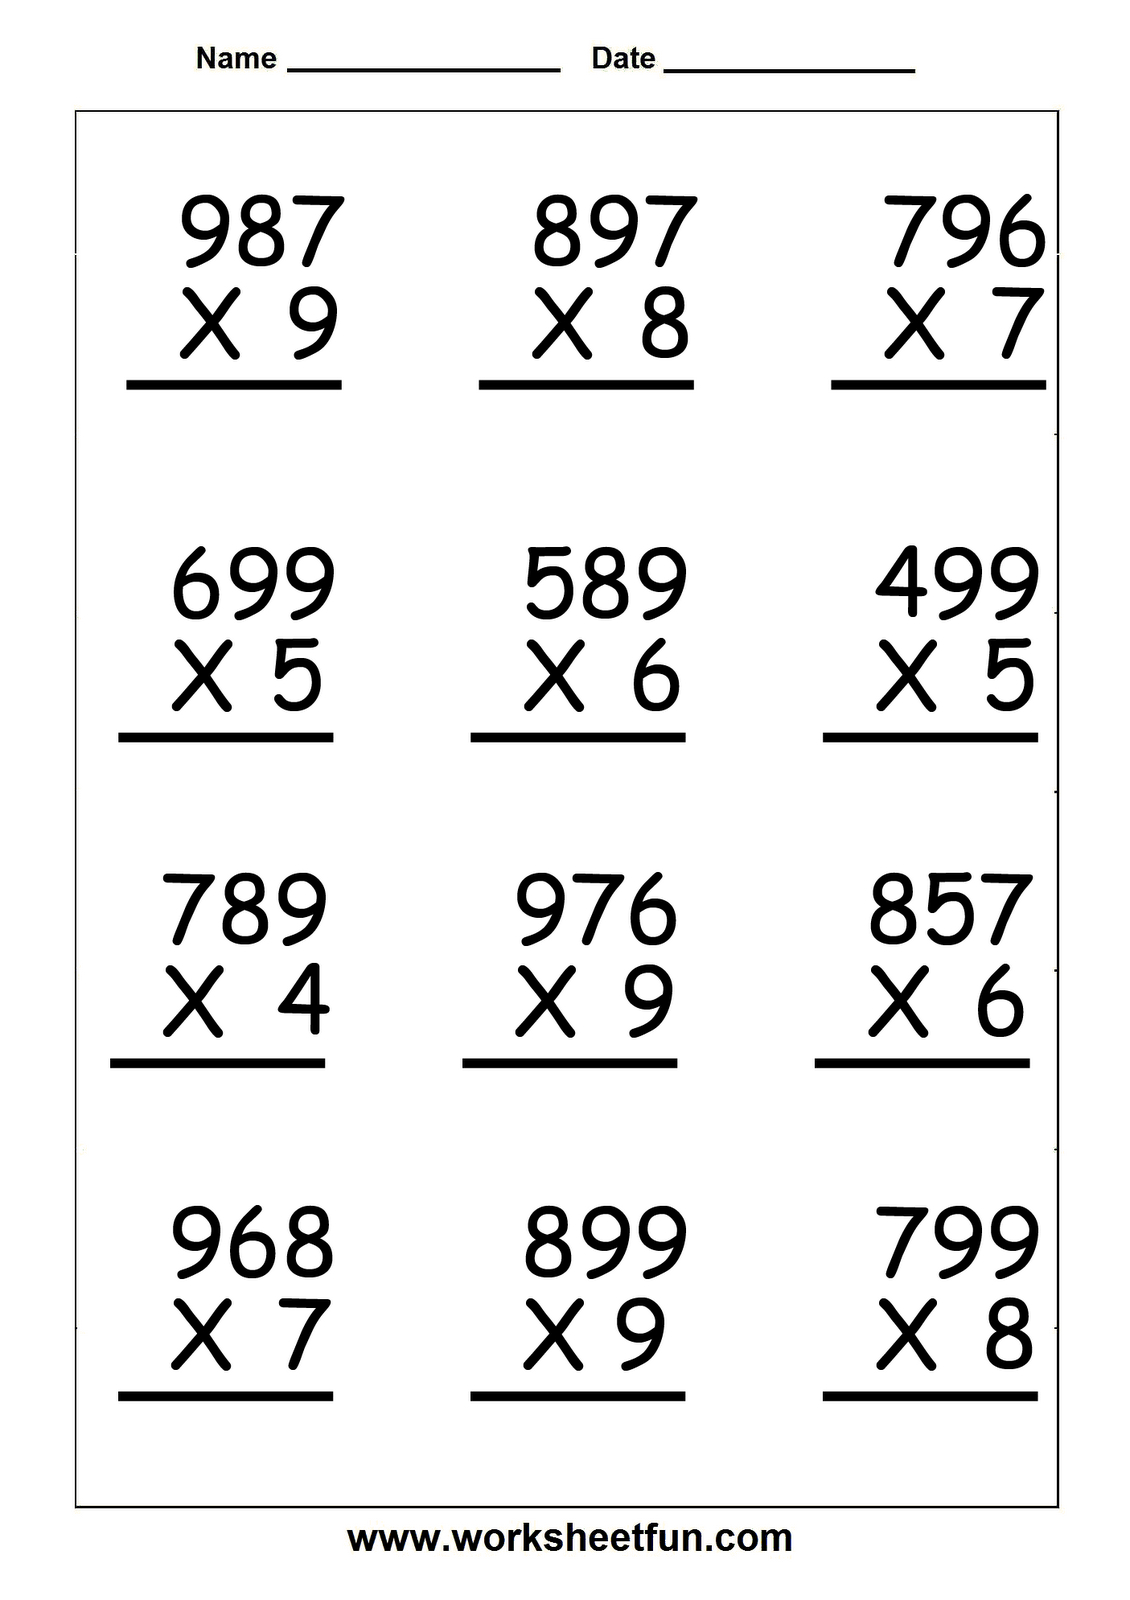 Multiplication Worksheets For 5Th Grade | Worksheetfun - Free - Free Printable Multiplication Worksheets For 5Th Grade